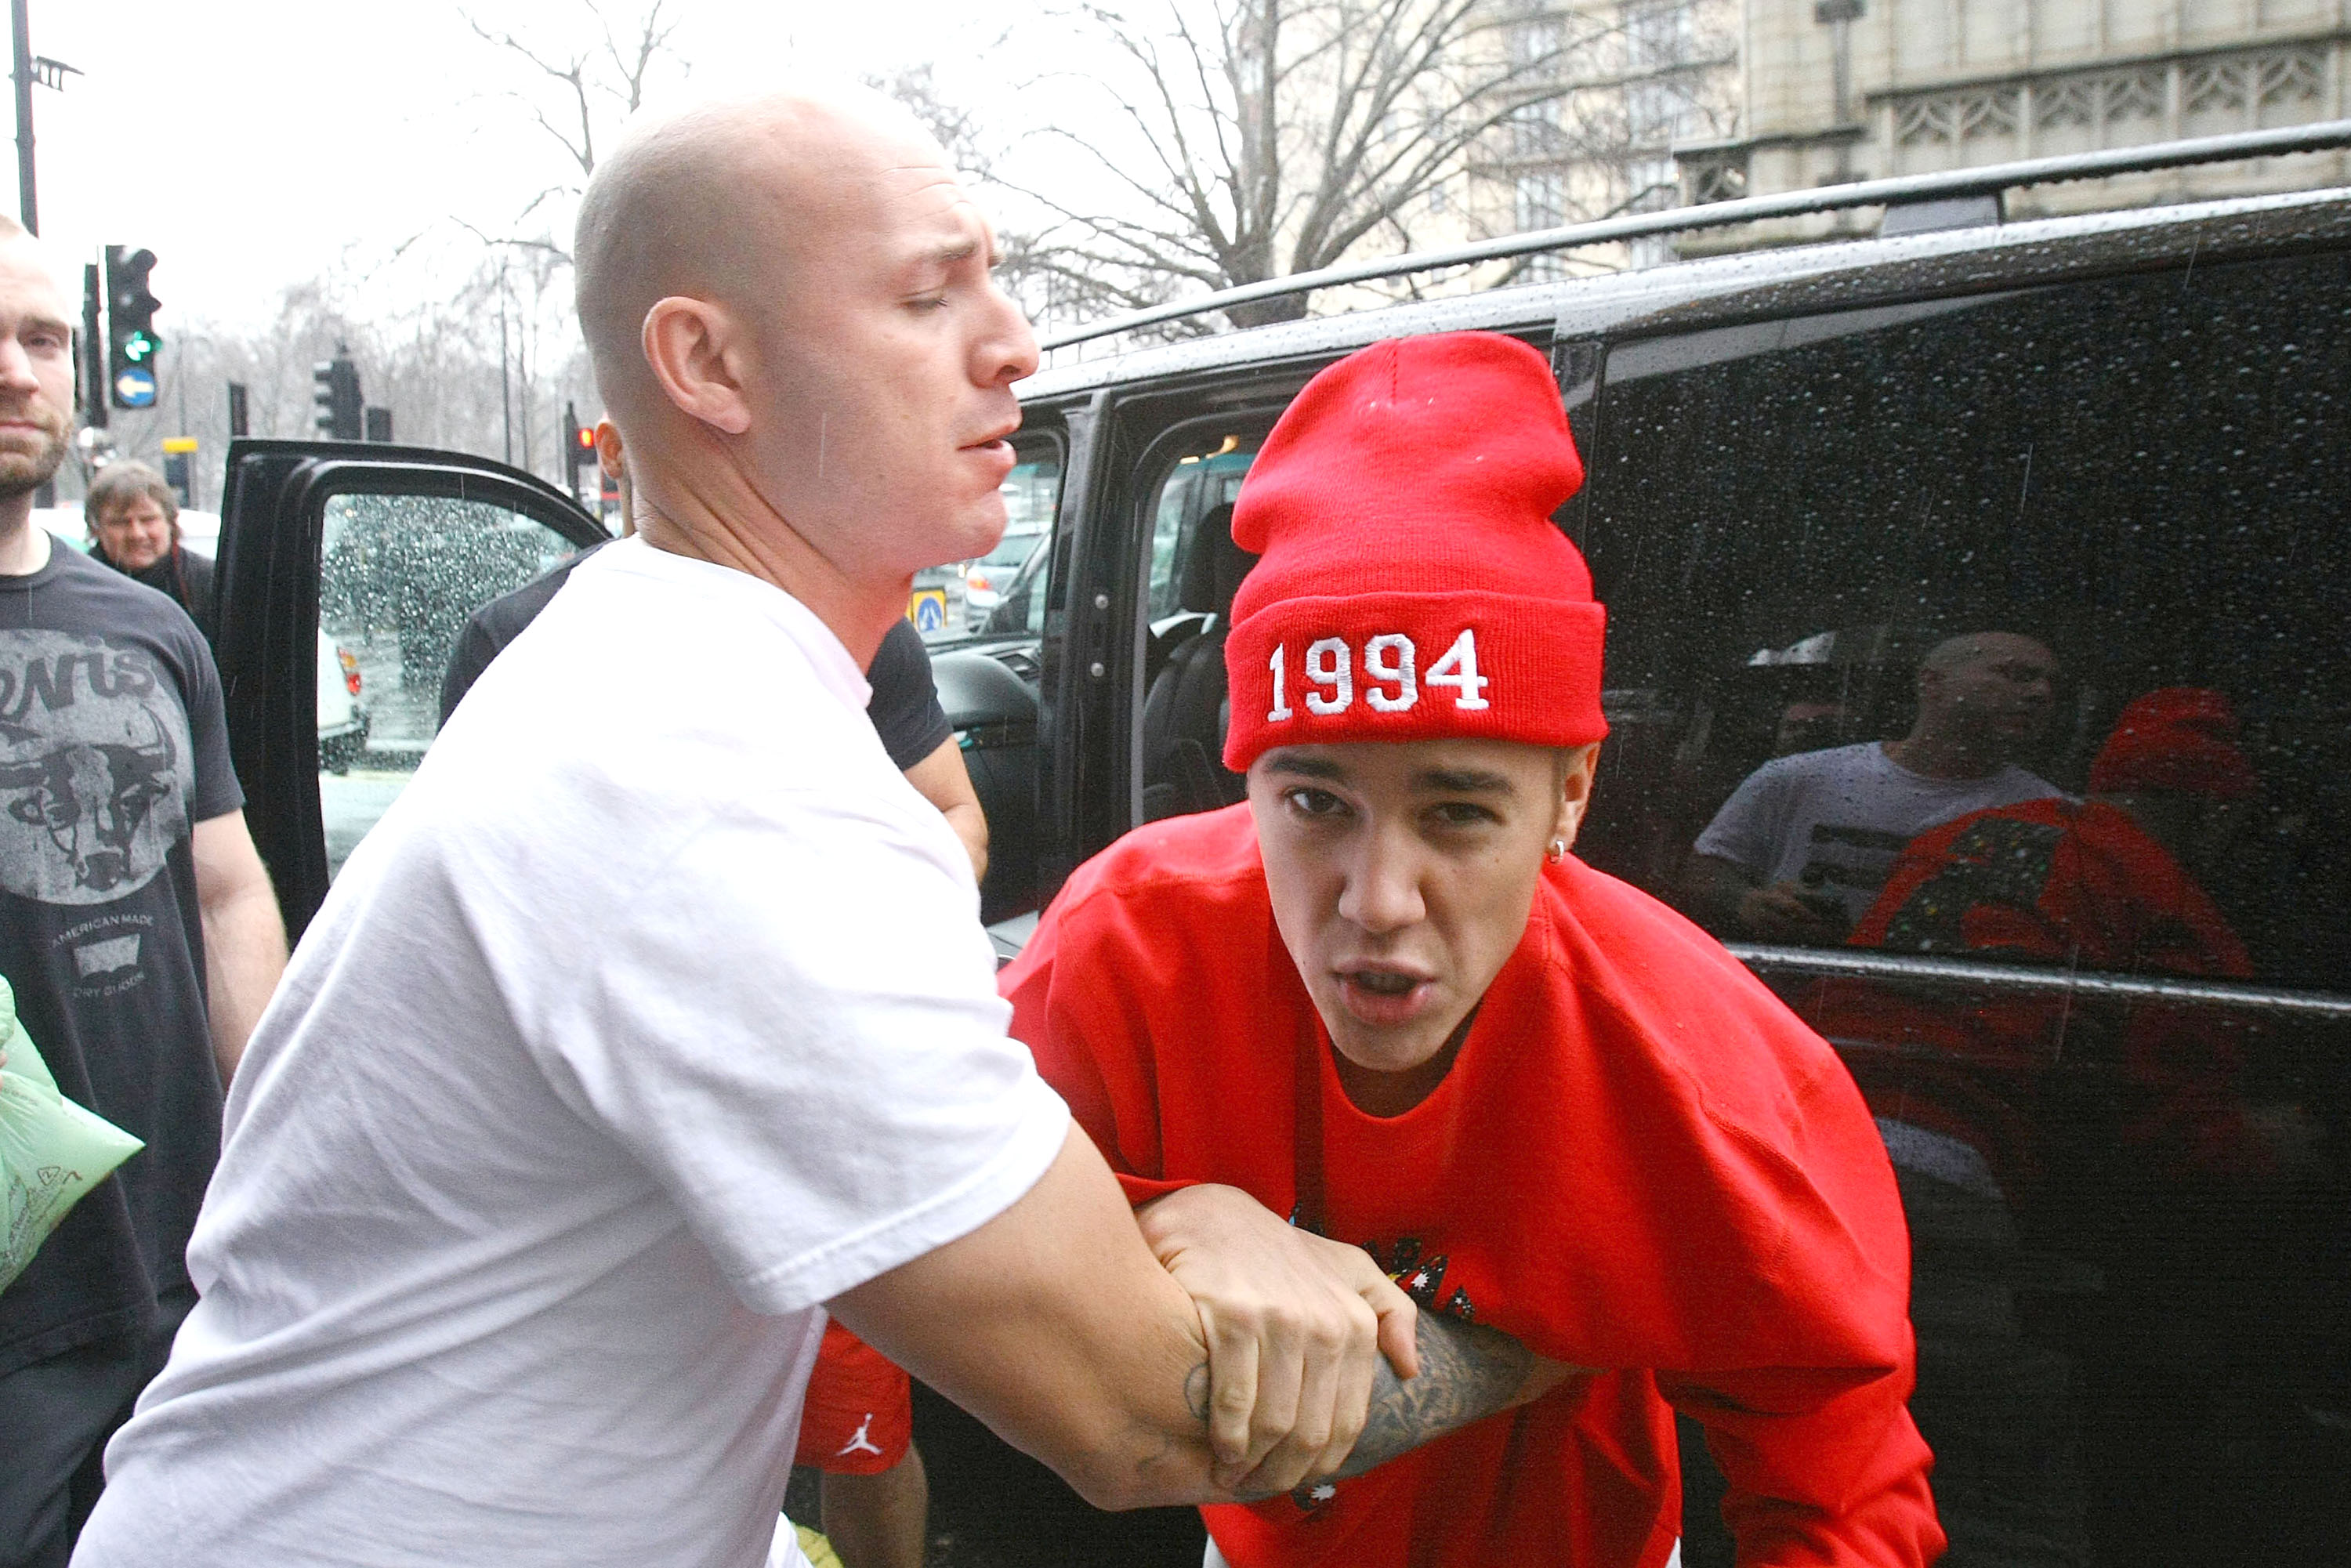 Justin-Bieber attacks paparazzi